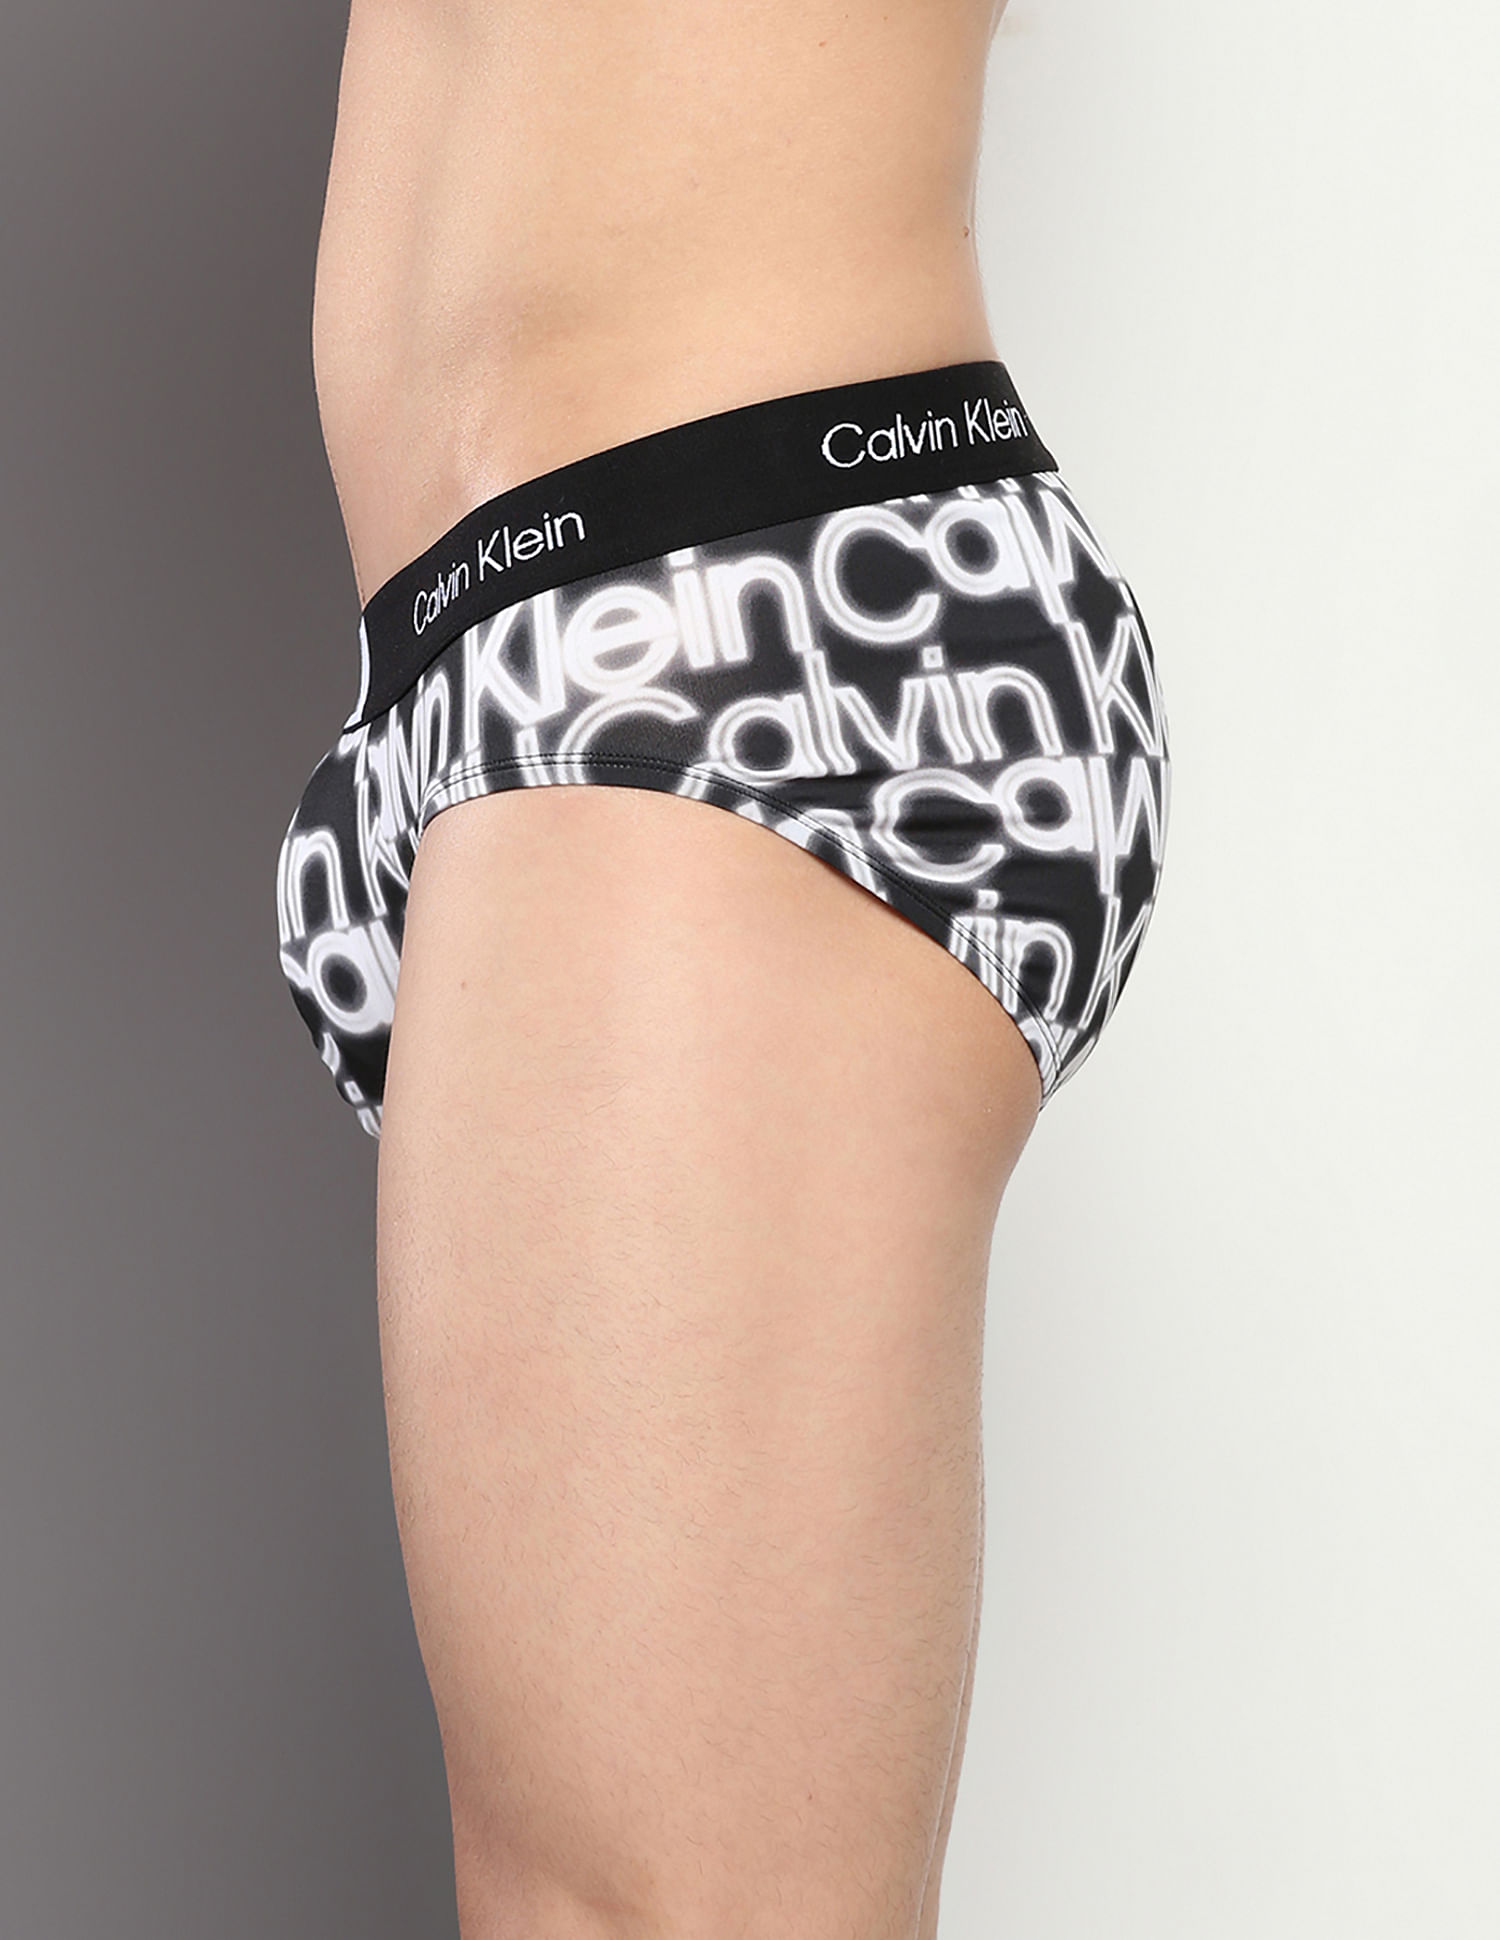 Shop Calvin Klein Plain Cotton Logo Underwear by Yang